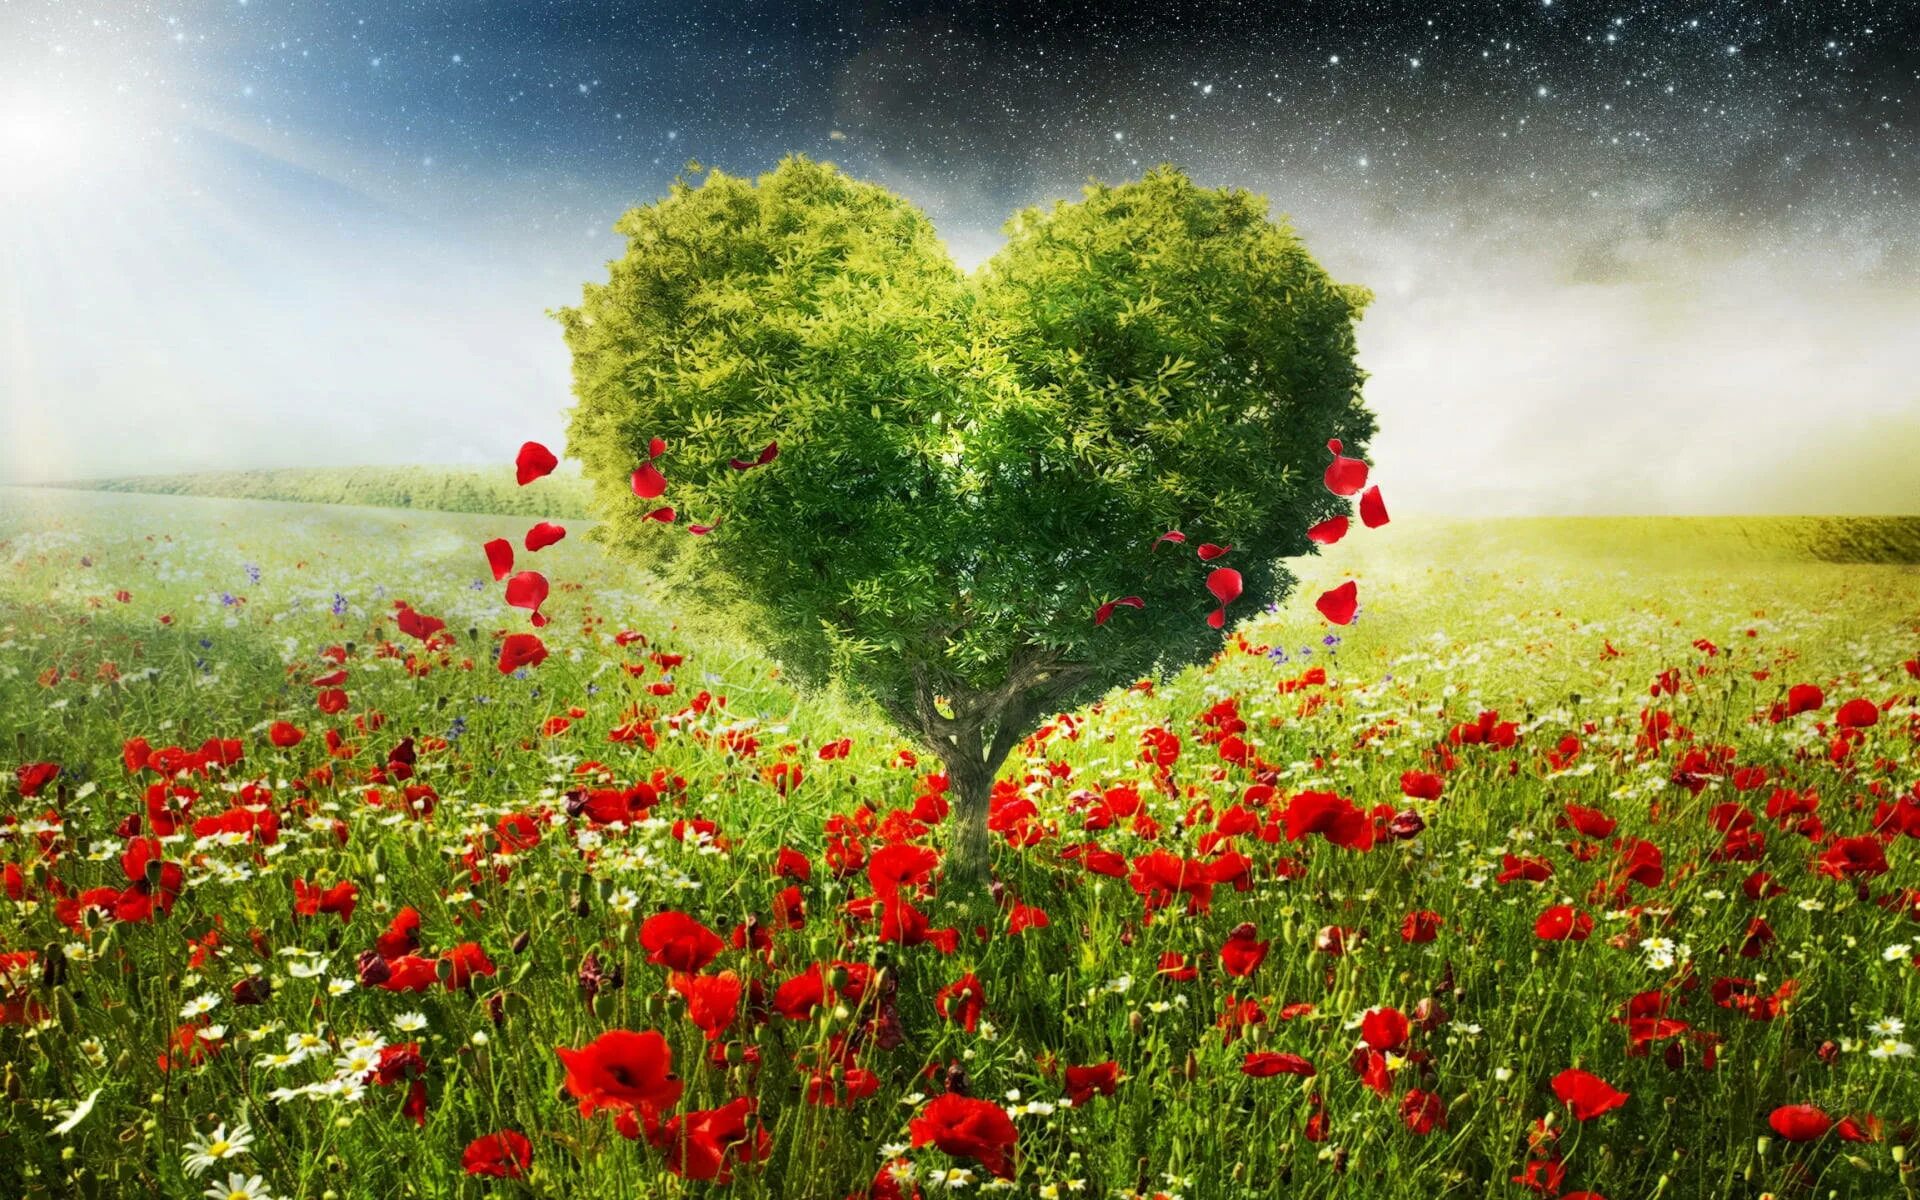 I love nature. Любовь к природе. Красивое дерево сердце. Сердечки в природе. Пейзаж любви.